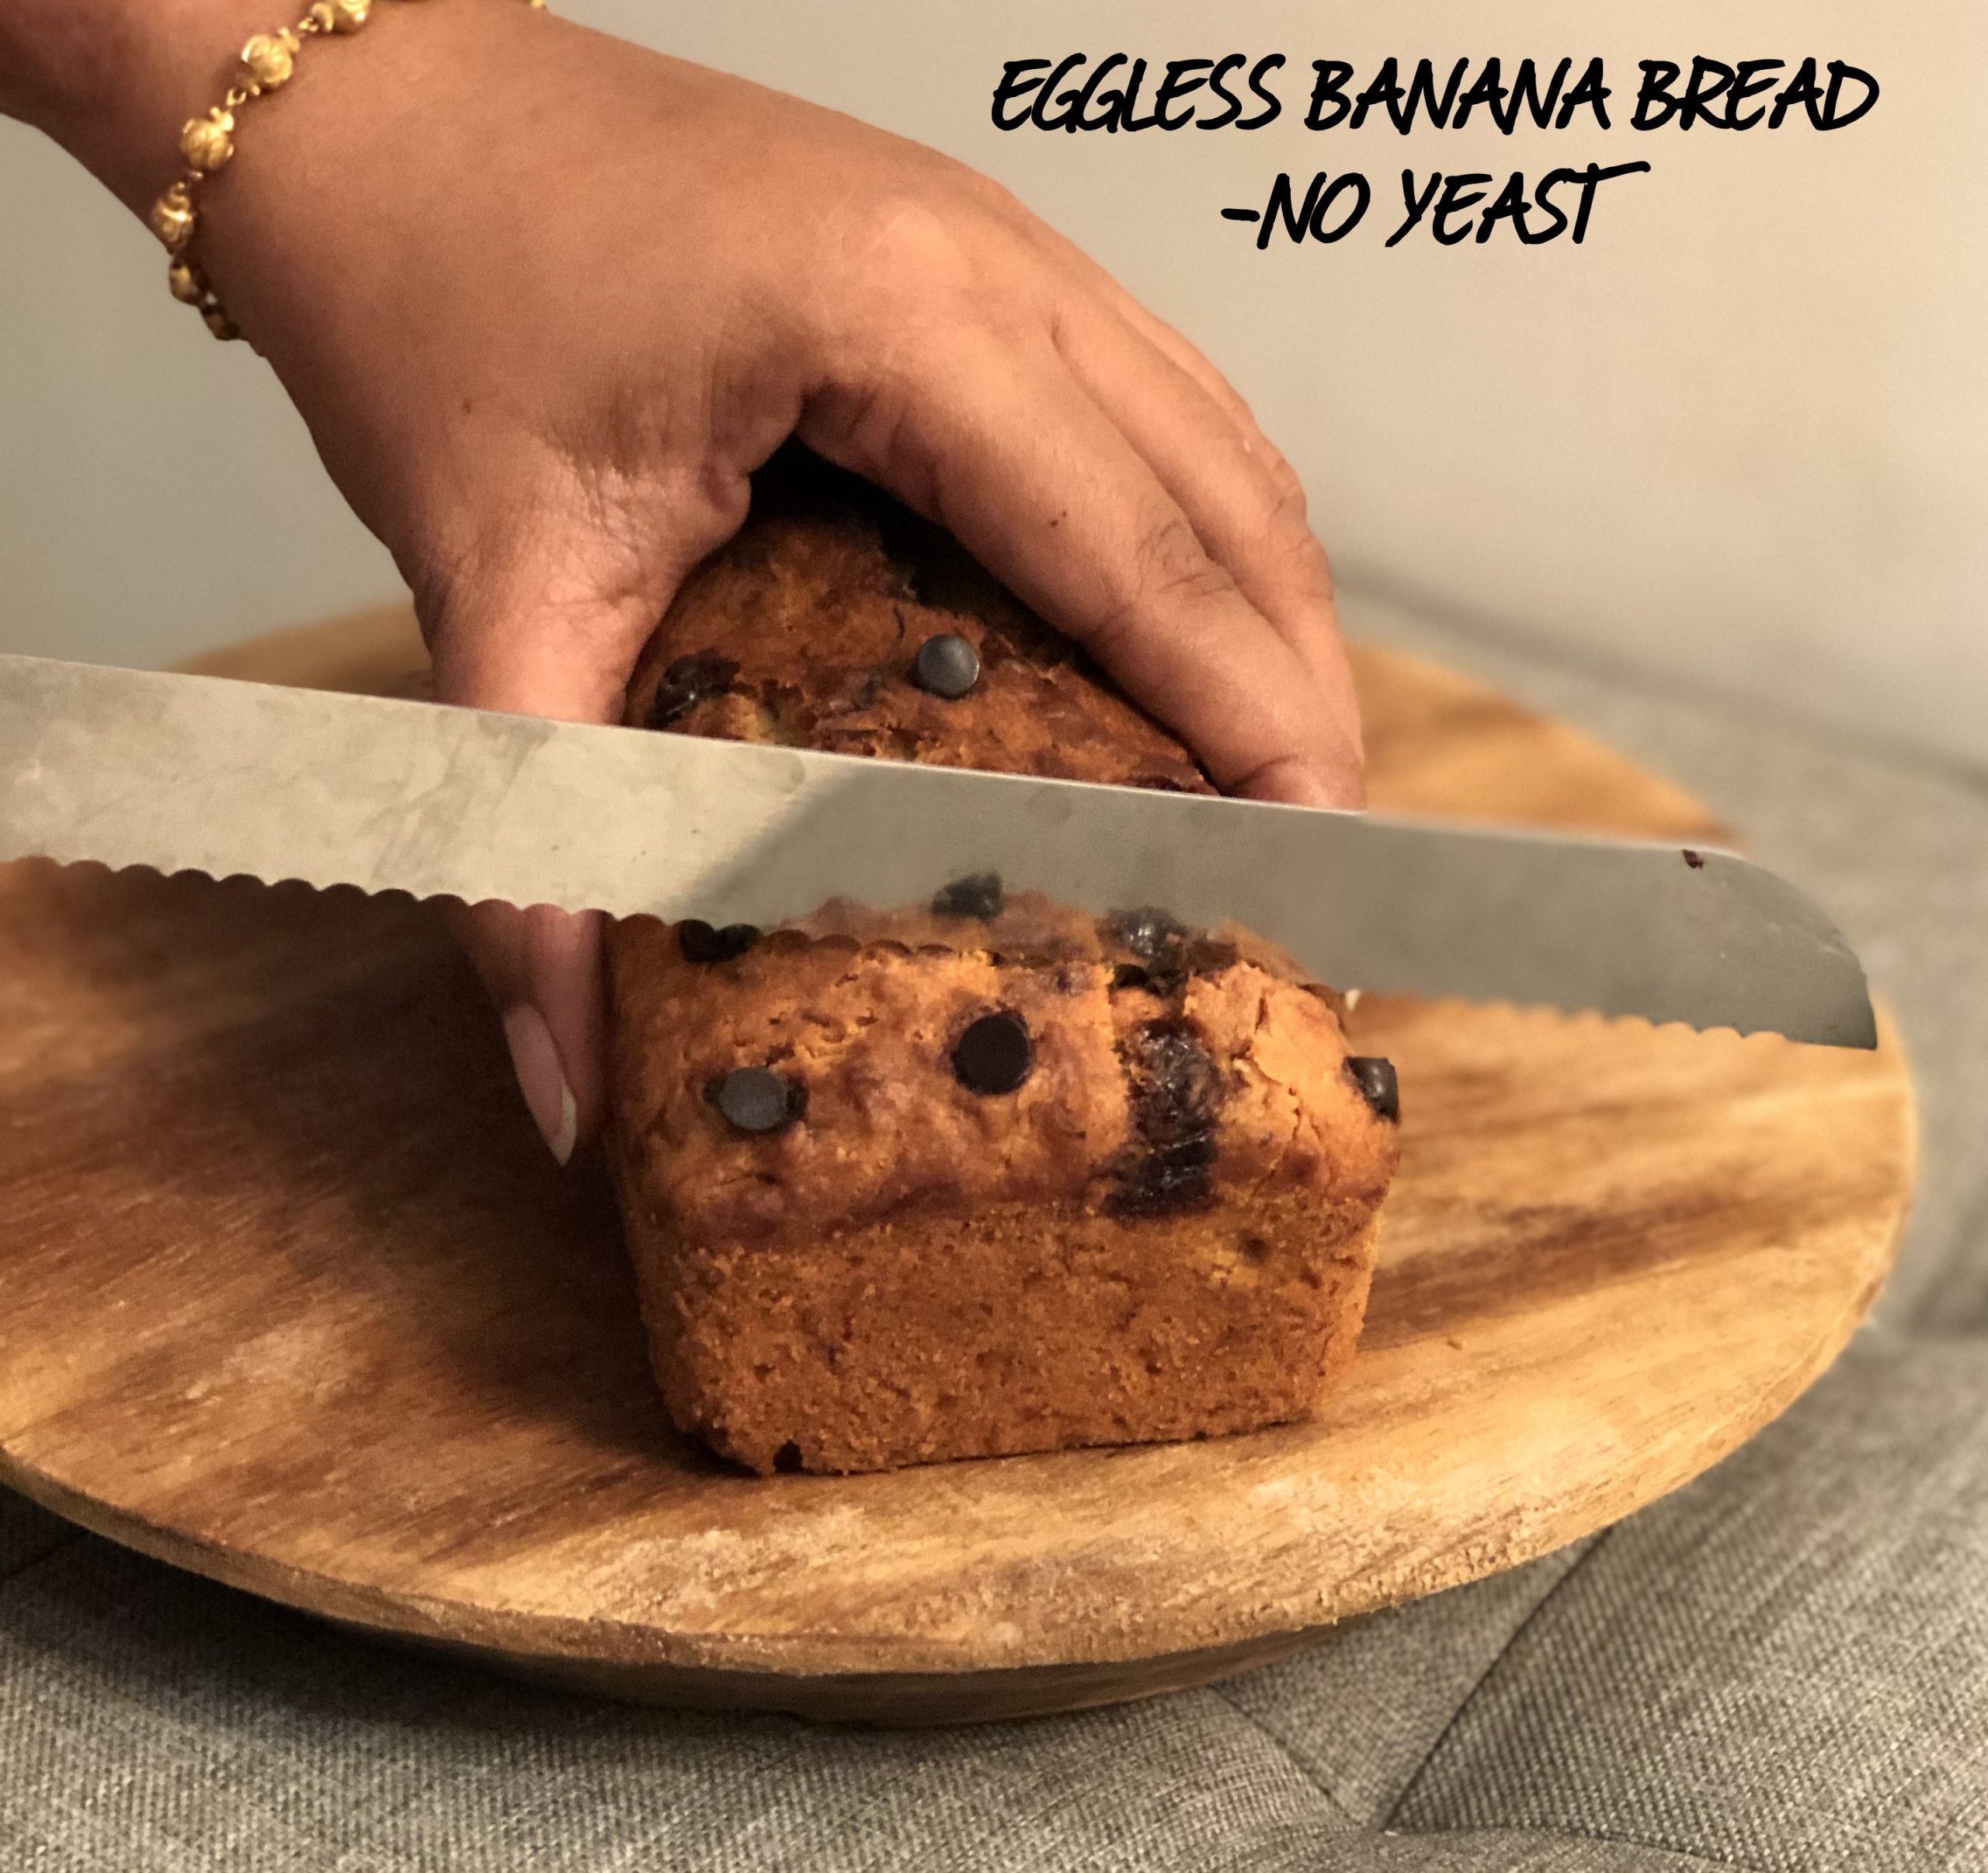 Eggless Banana Bread Recipe-Whole Wheat, No Yeast